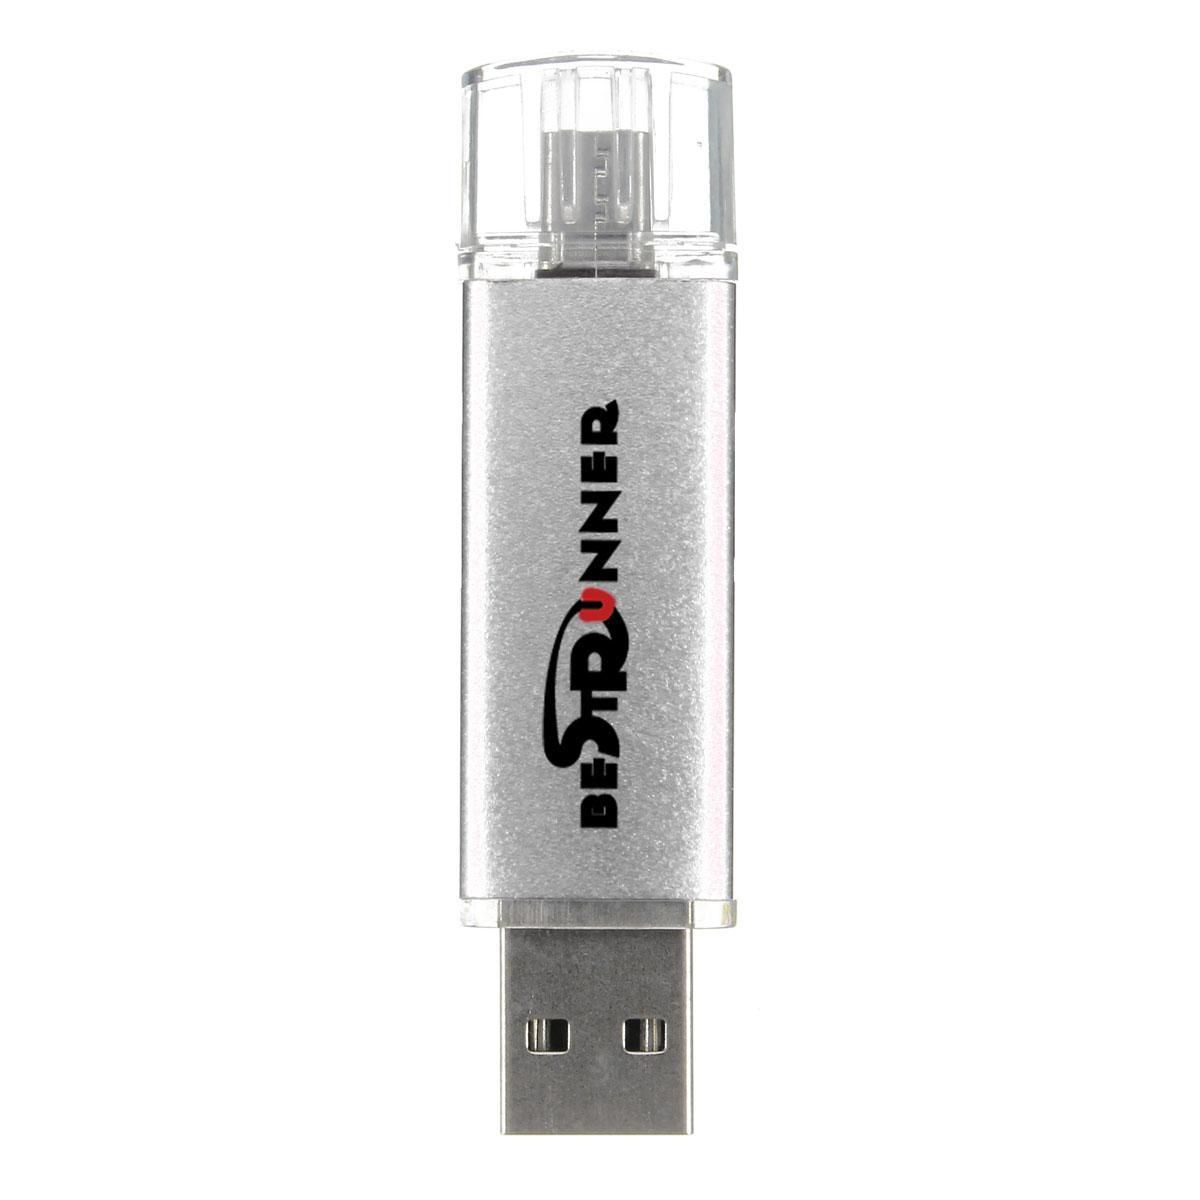 OTG Phone USB Flash Drives